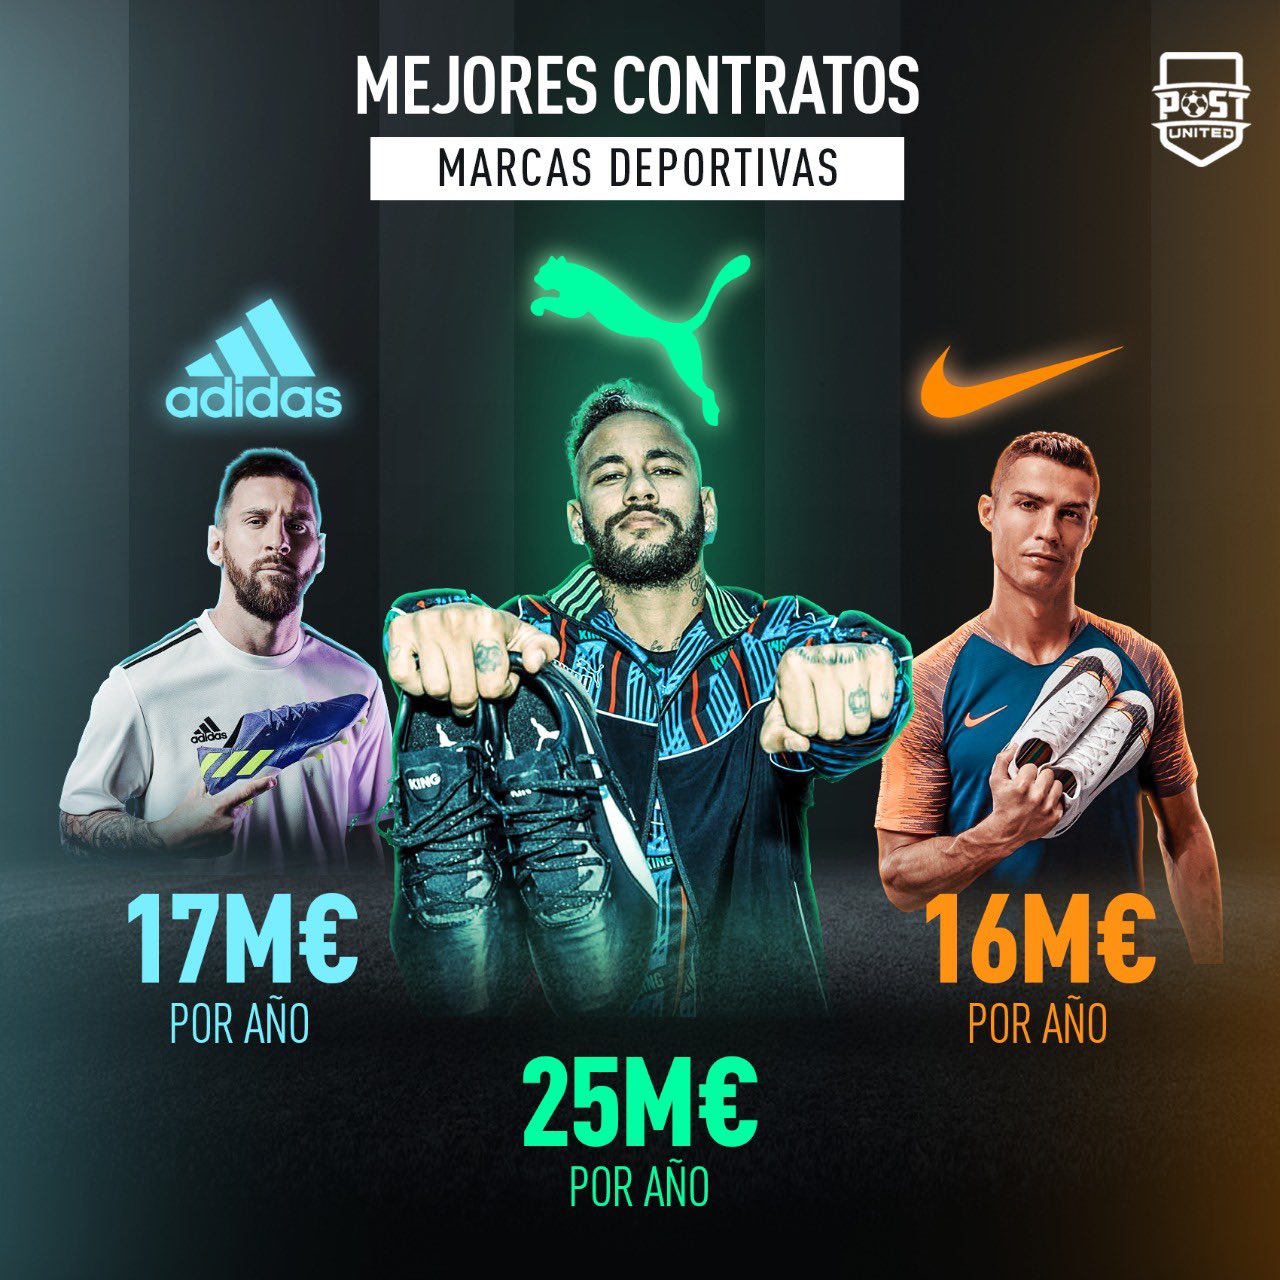 Post United on Twitter: "💸 El contrato de @neymarjr con supera a los Messi con Adidas y @Cristiano con Nike https://t.co/GWK67GddXT" / Twitter